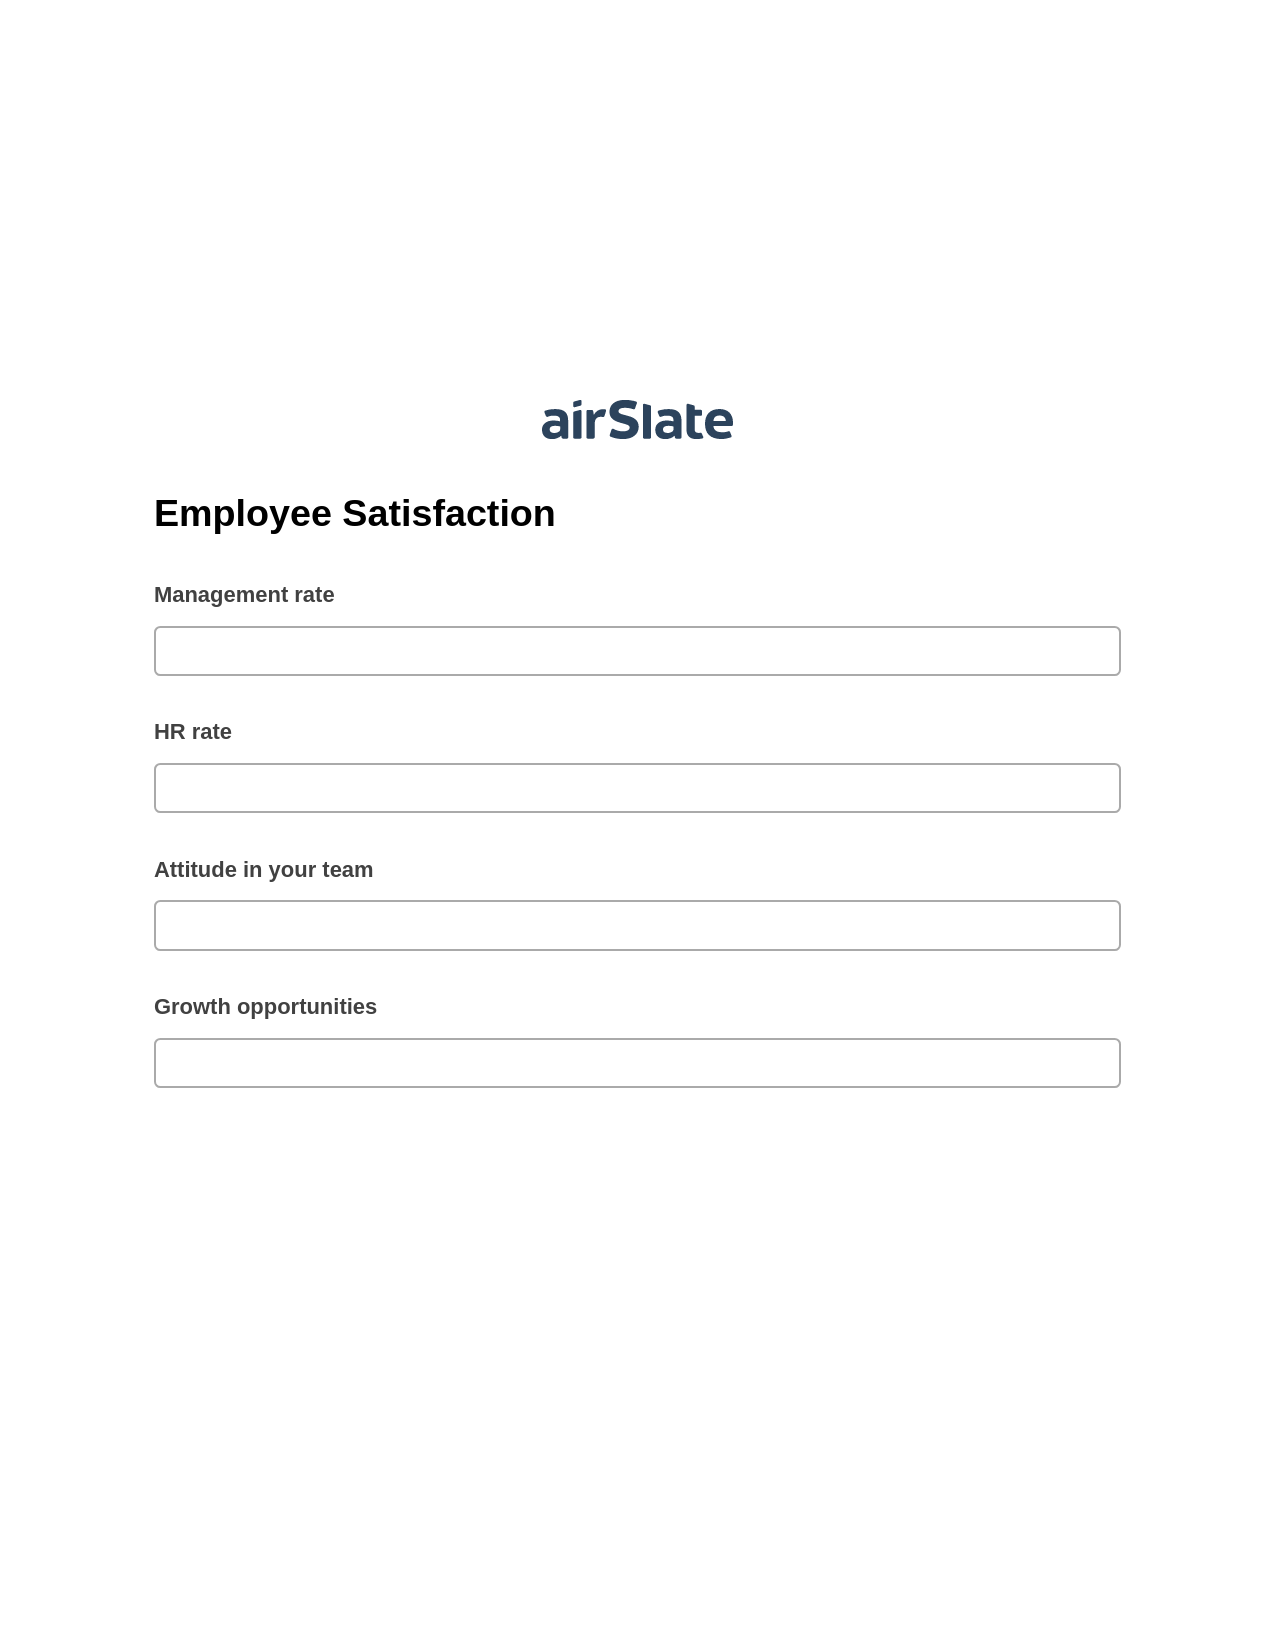 Employee Satisfaction Pre-fill from another Slate Bot, Invoke Salesforce Process Bot, Dropbox Bot